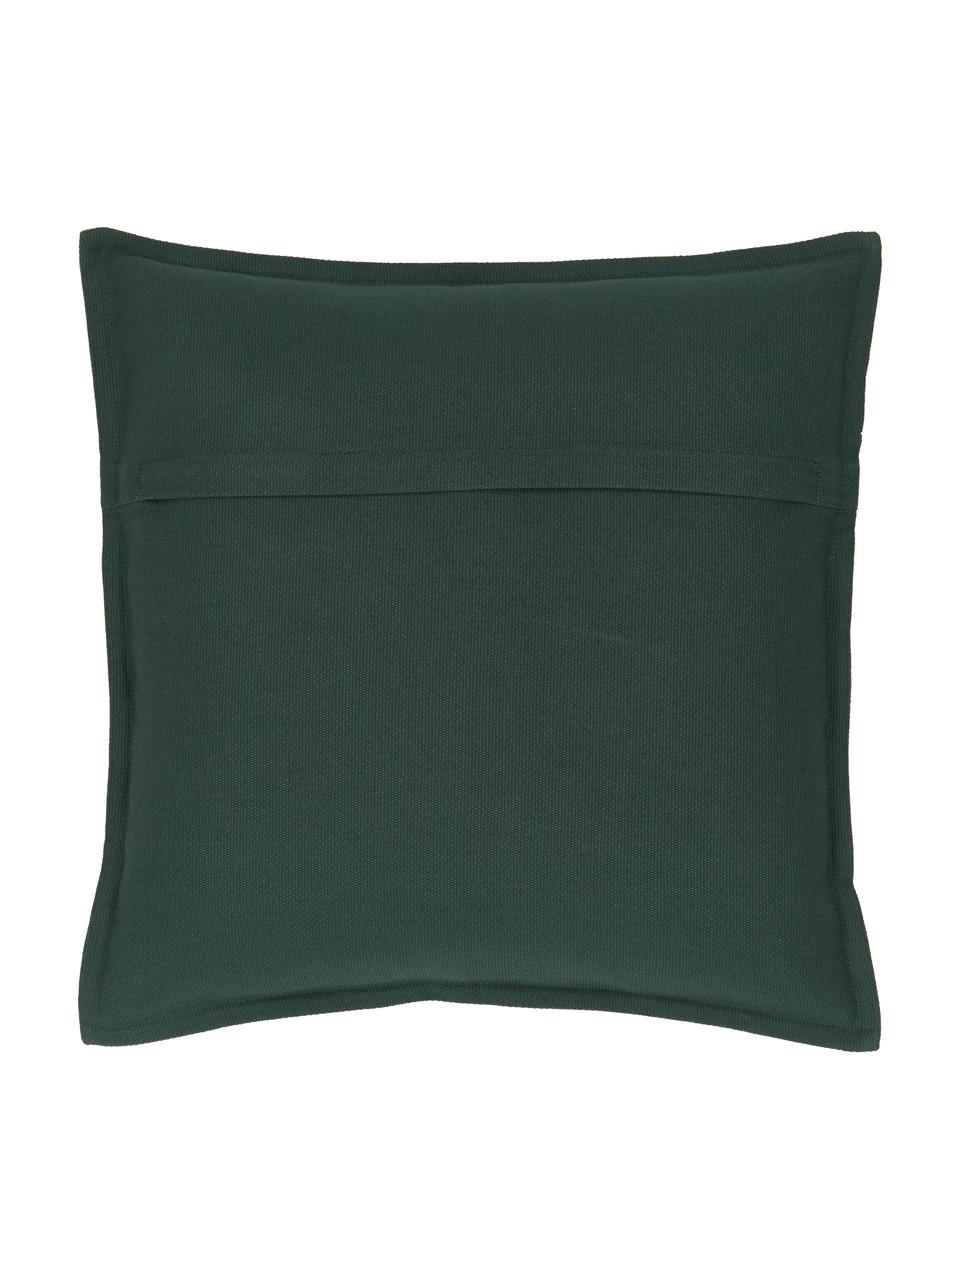 Federa arredo in cotone verde scuro Mads, 100% cotone, Verde, Larg. 40 x Lung. 40 cm